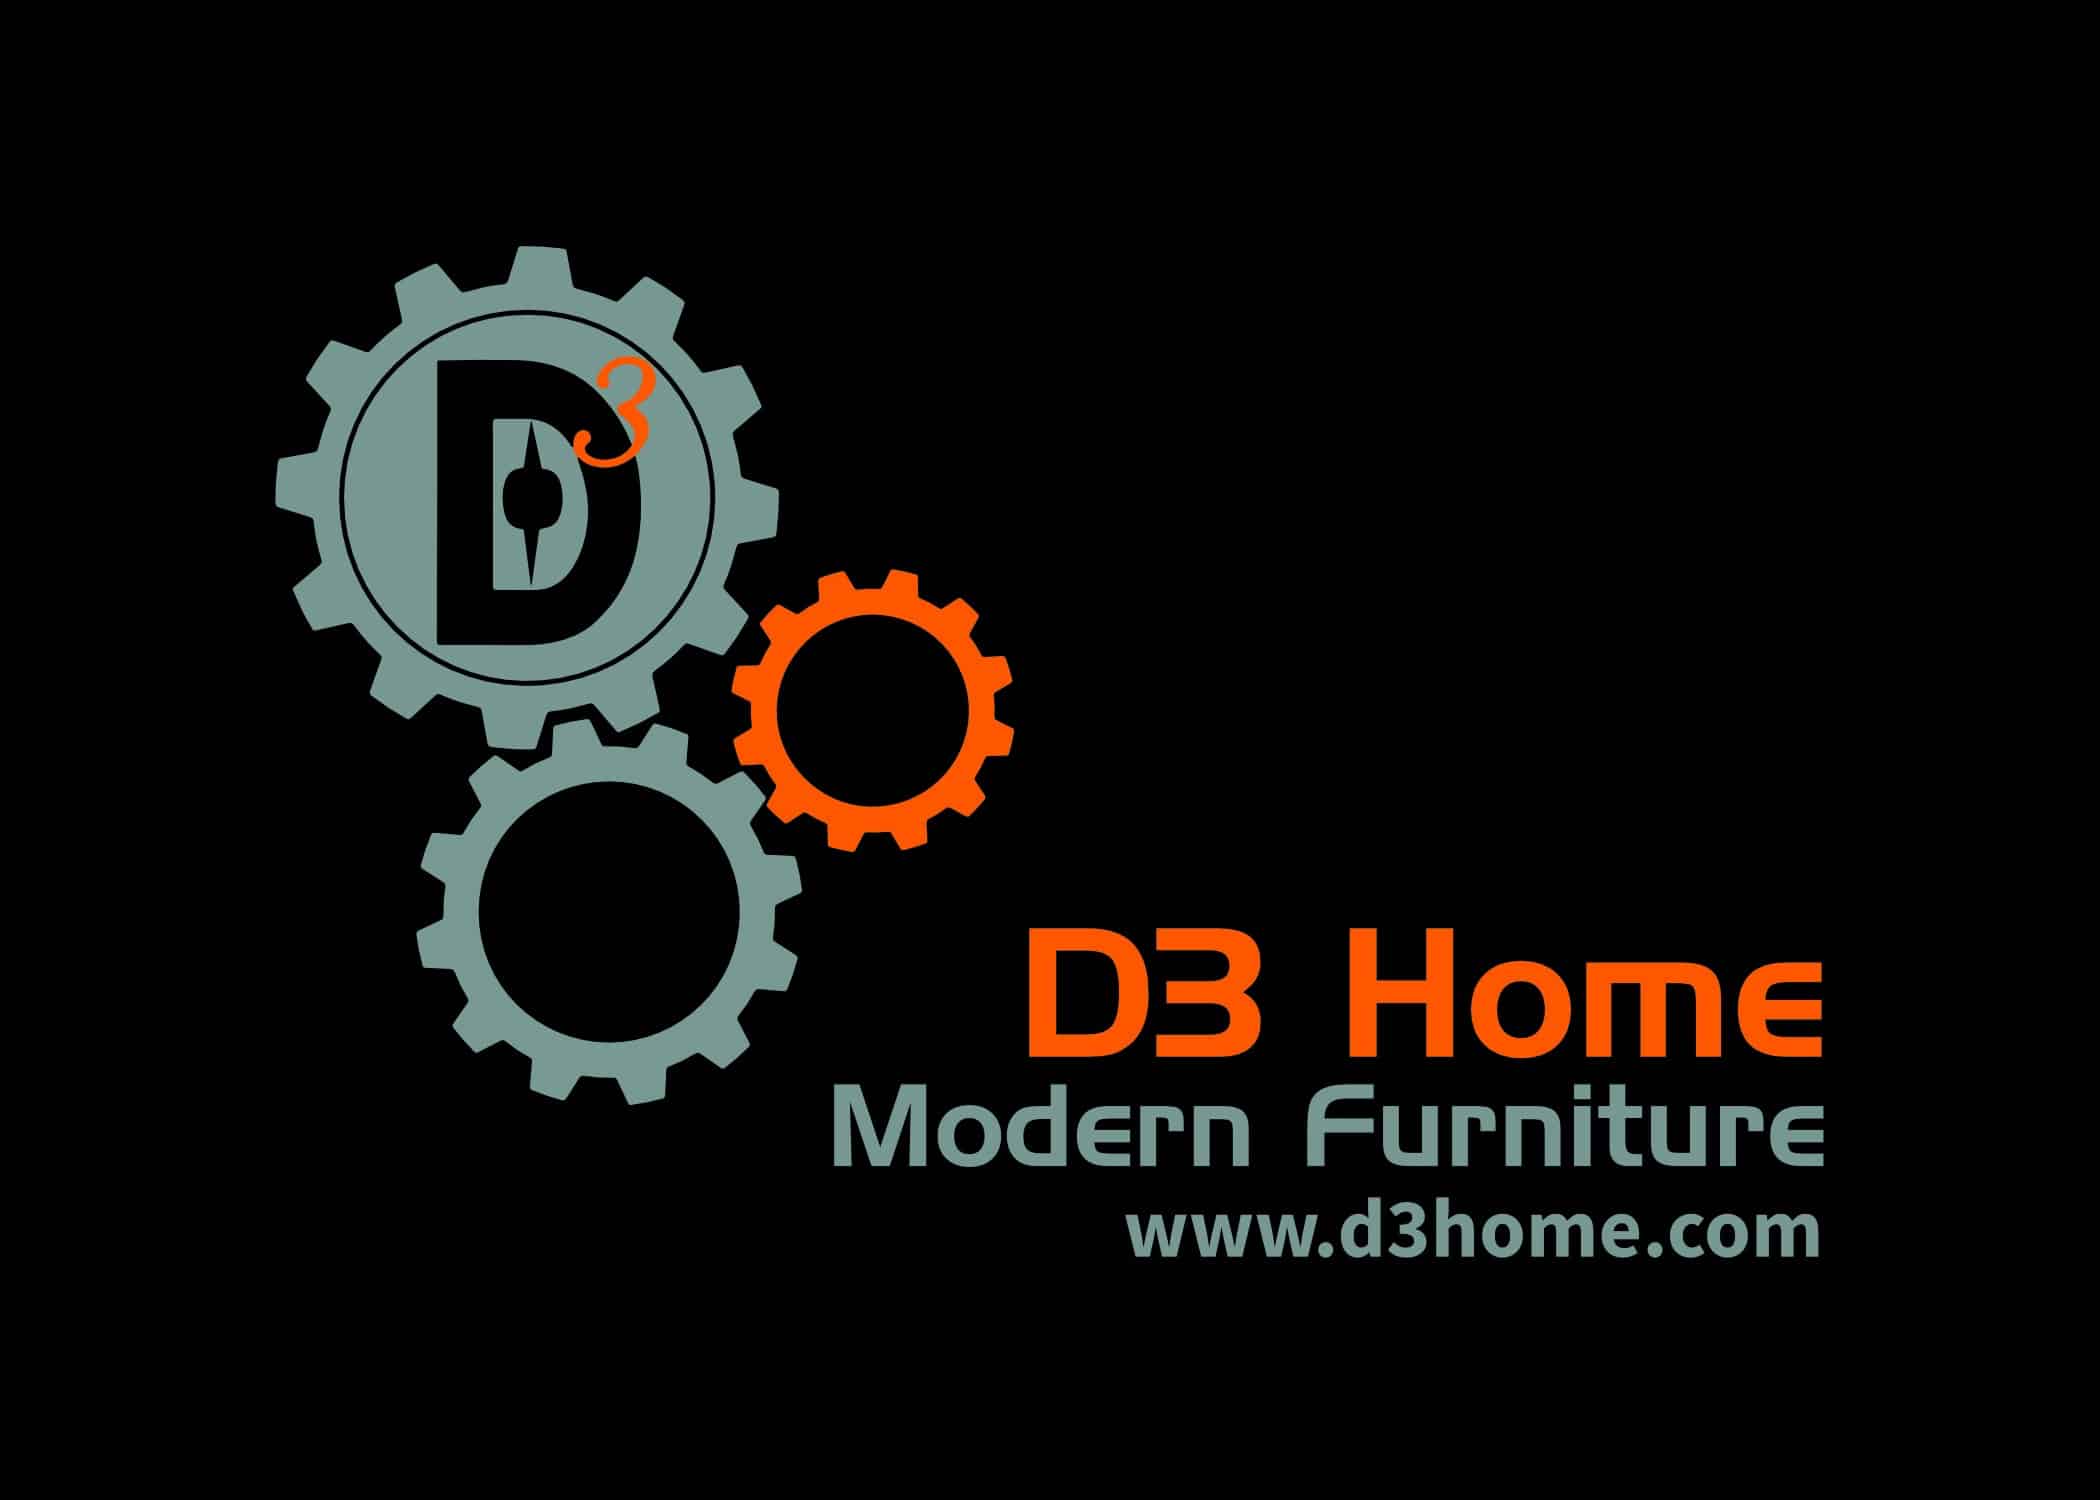 D3 Home Modern Furniture orange and grey gears logo against a black background.